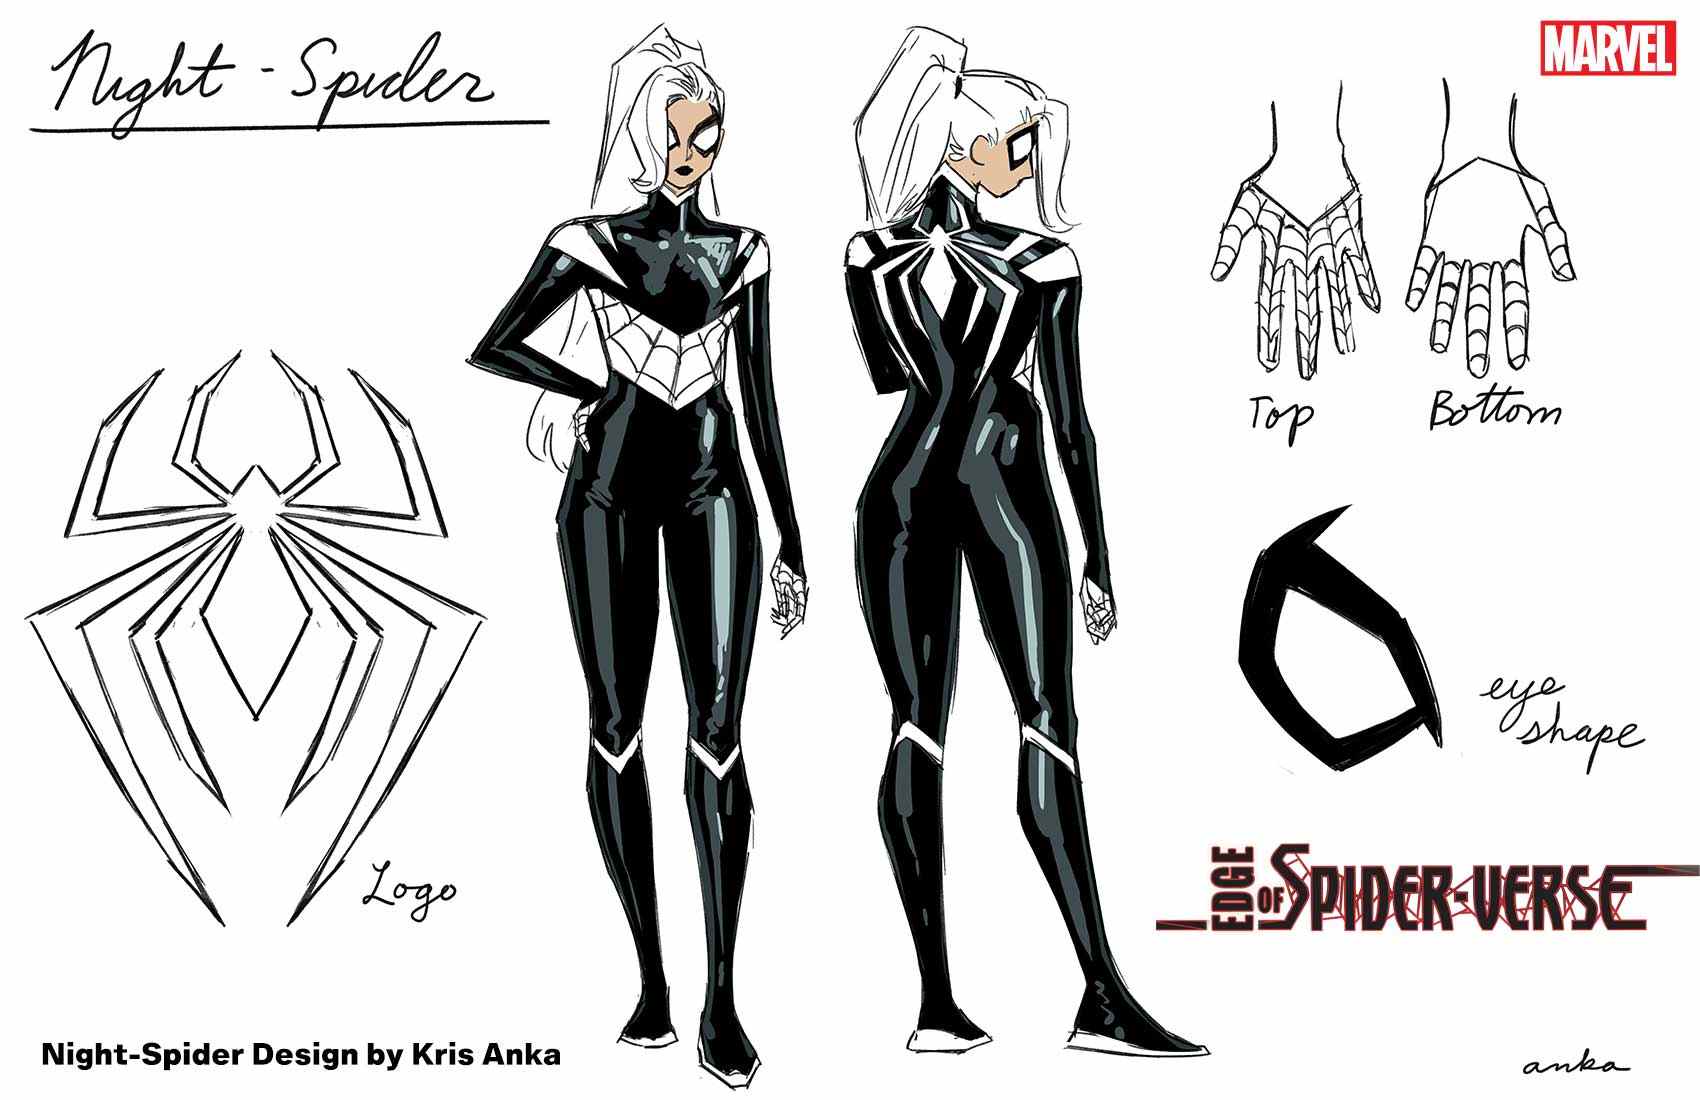 Conception des costumes Night-Spider par Kris Anka